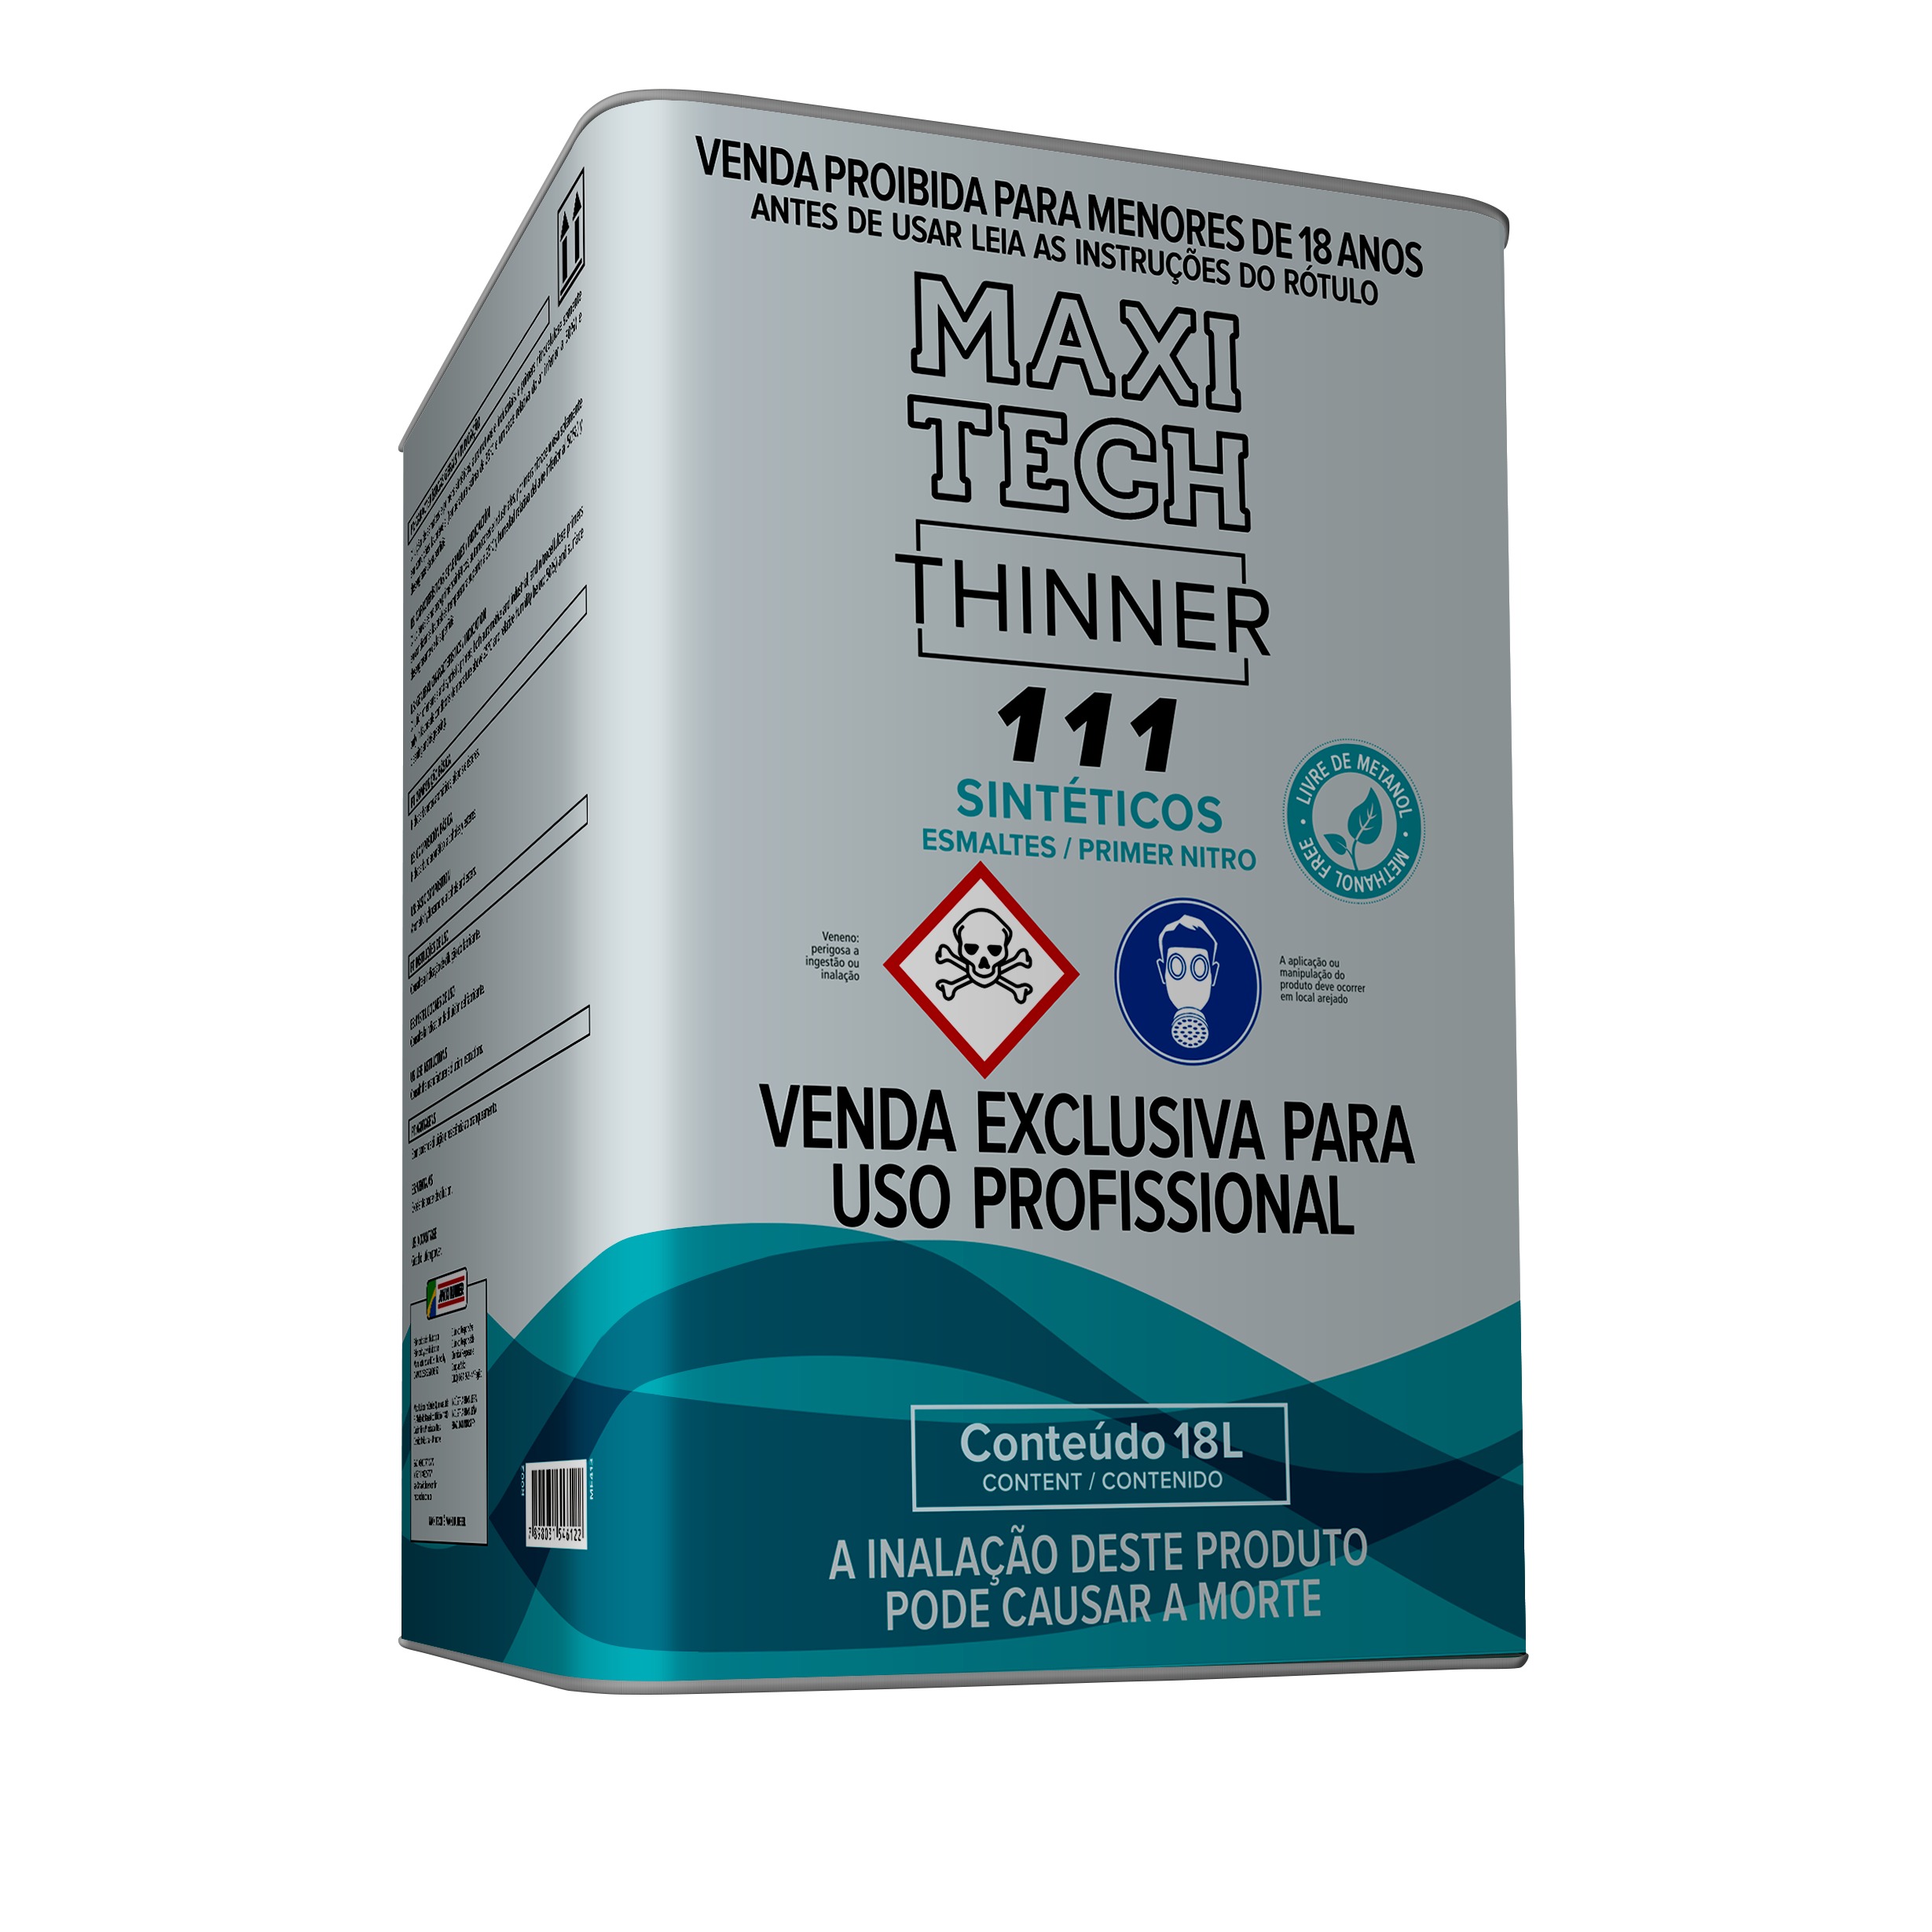 Thinner 111 Synthetic Primer Nitro - 18L